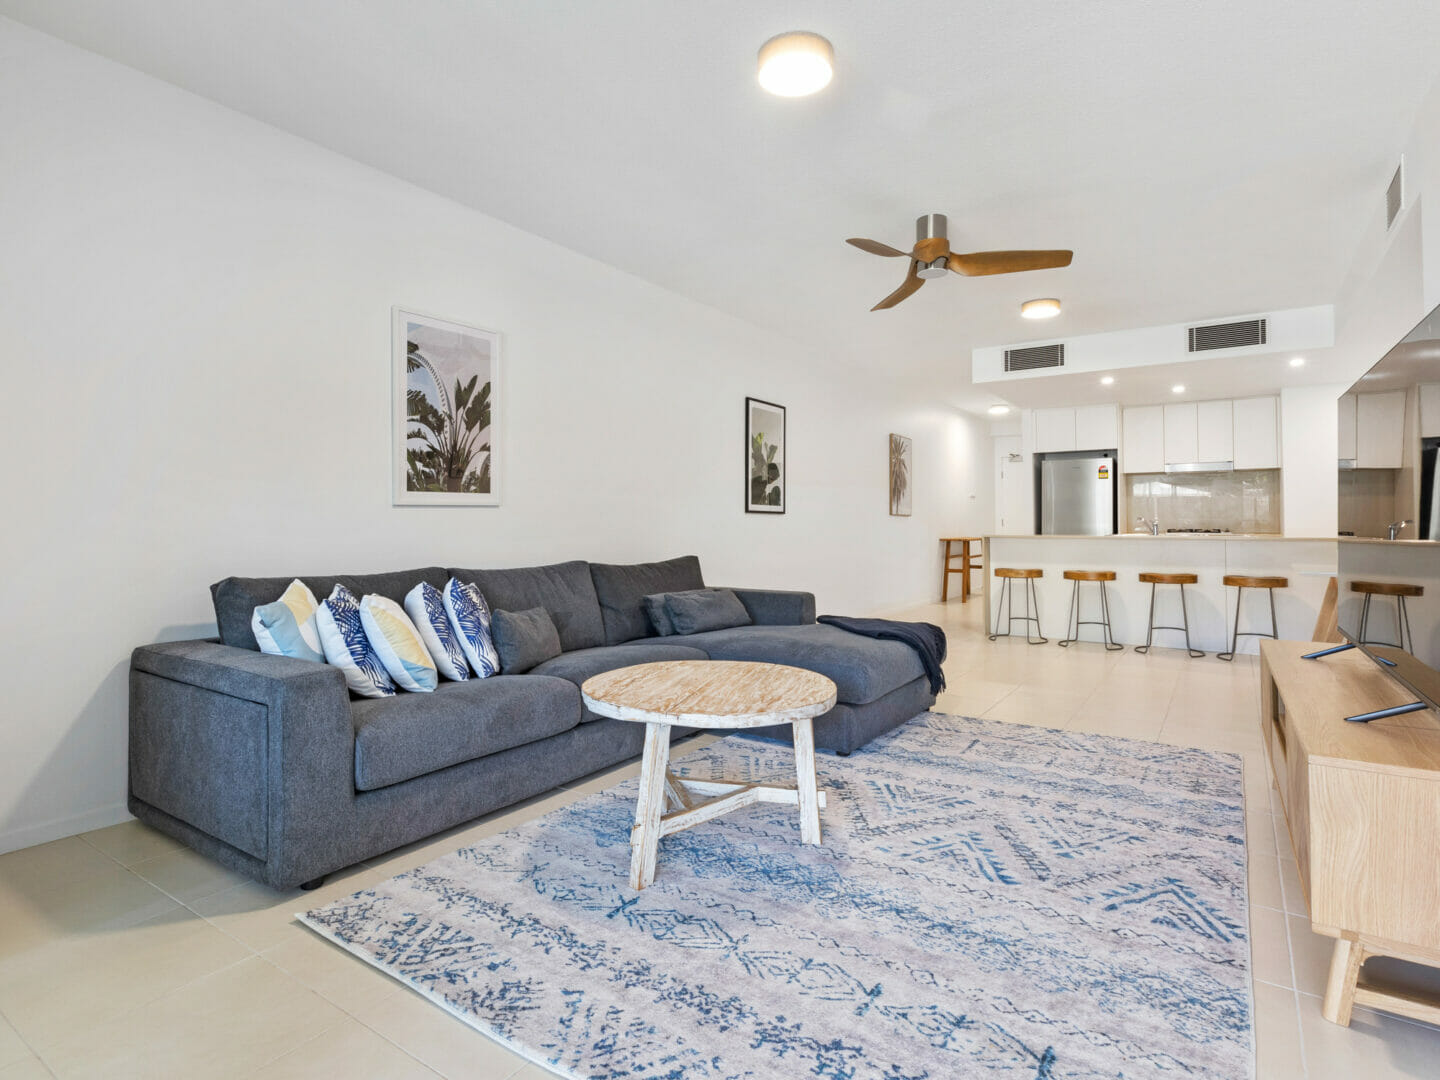 Living room with modular lounge, coffee table and rug